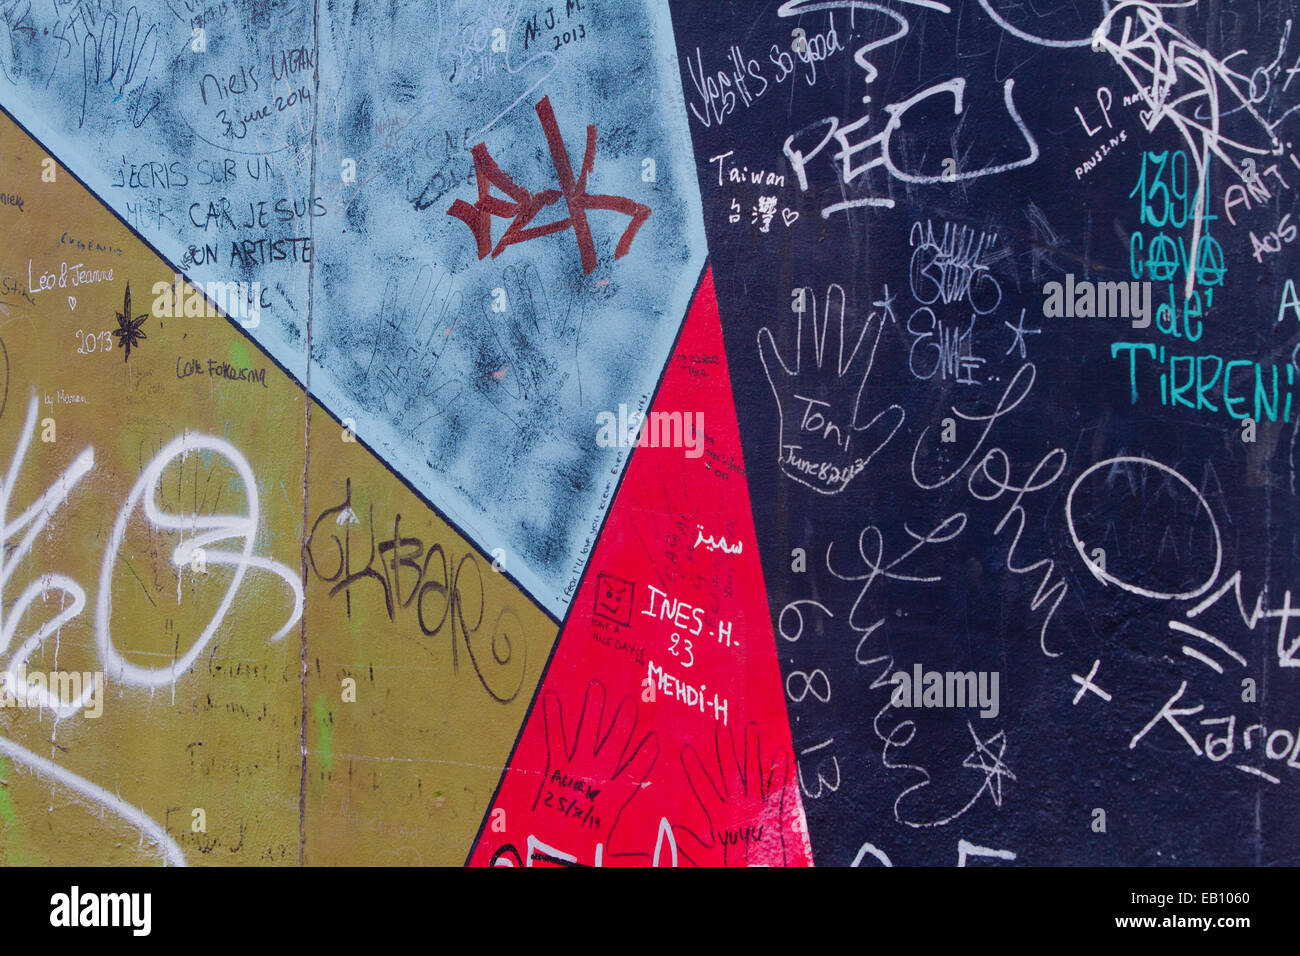 Graffiti-Dreieck Stichwörter Streetart urban Mauer Stockfoto